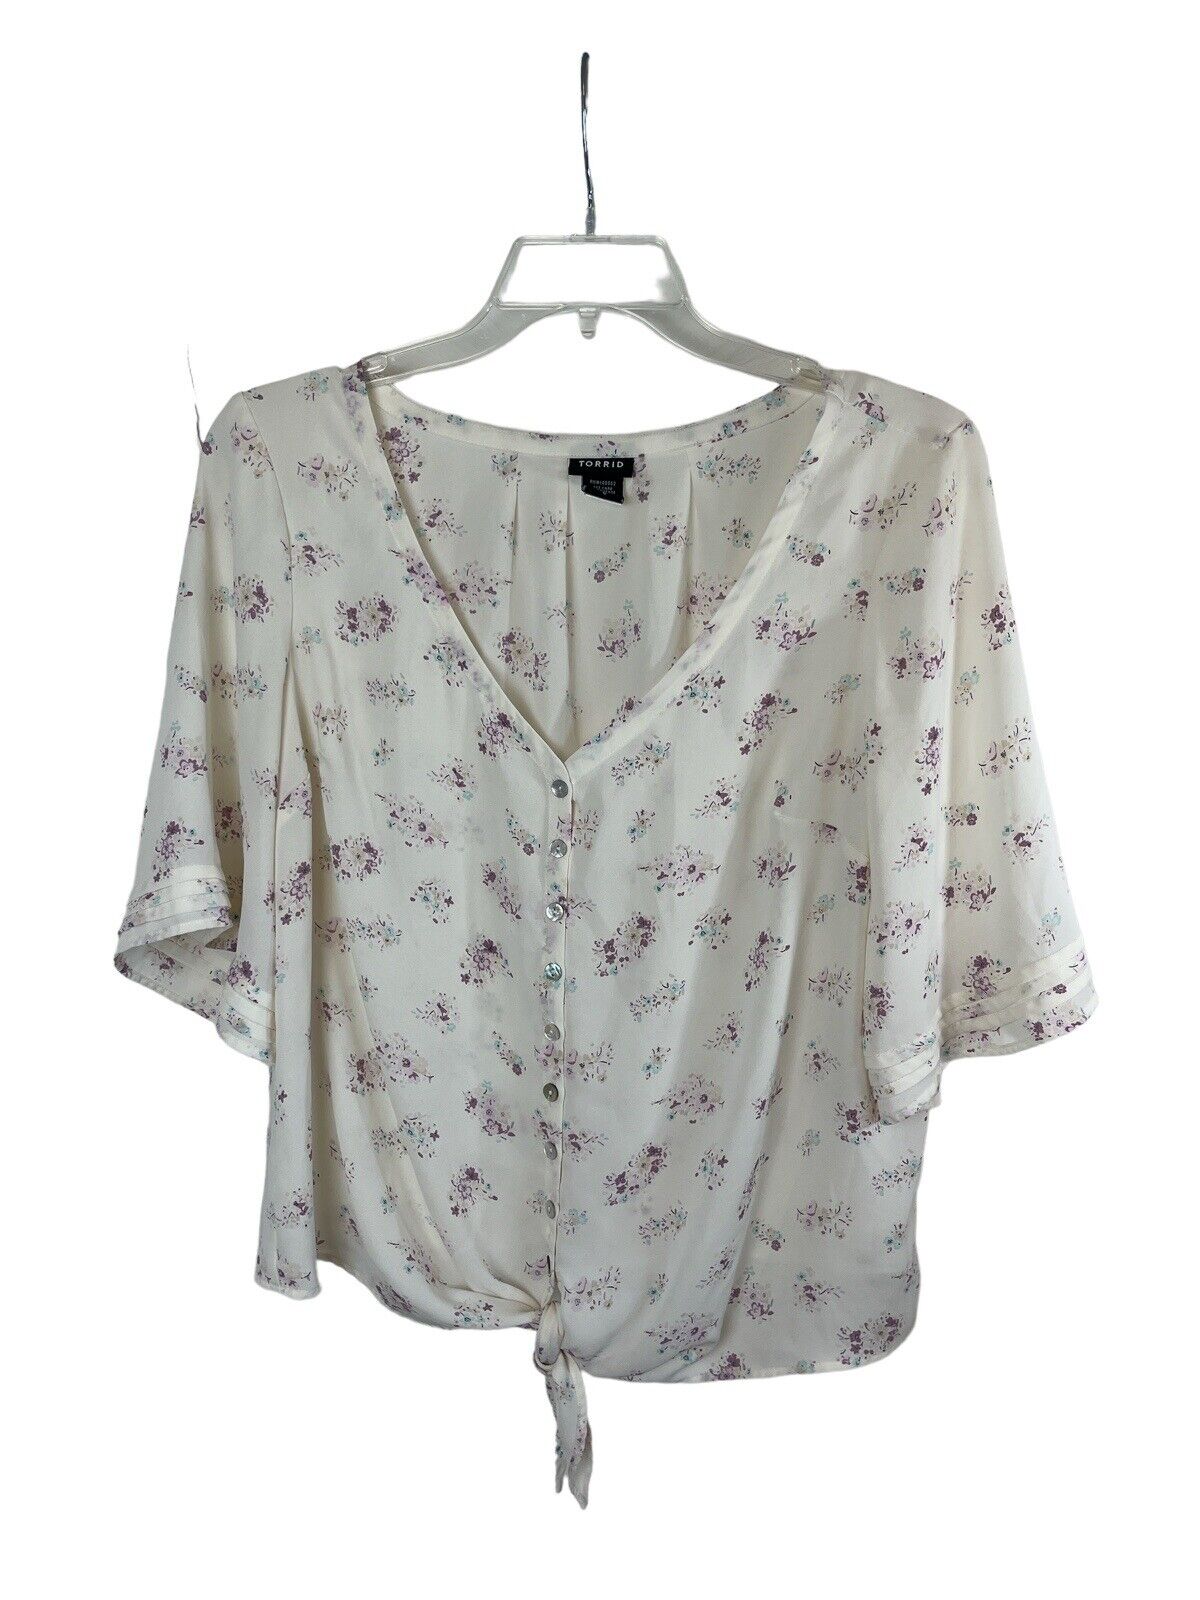 torrid 0 floral print blouse - image 1